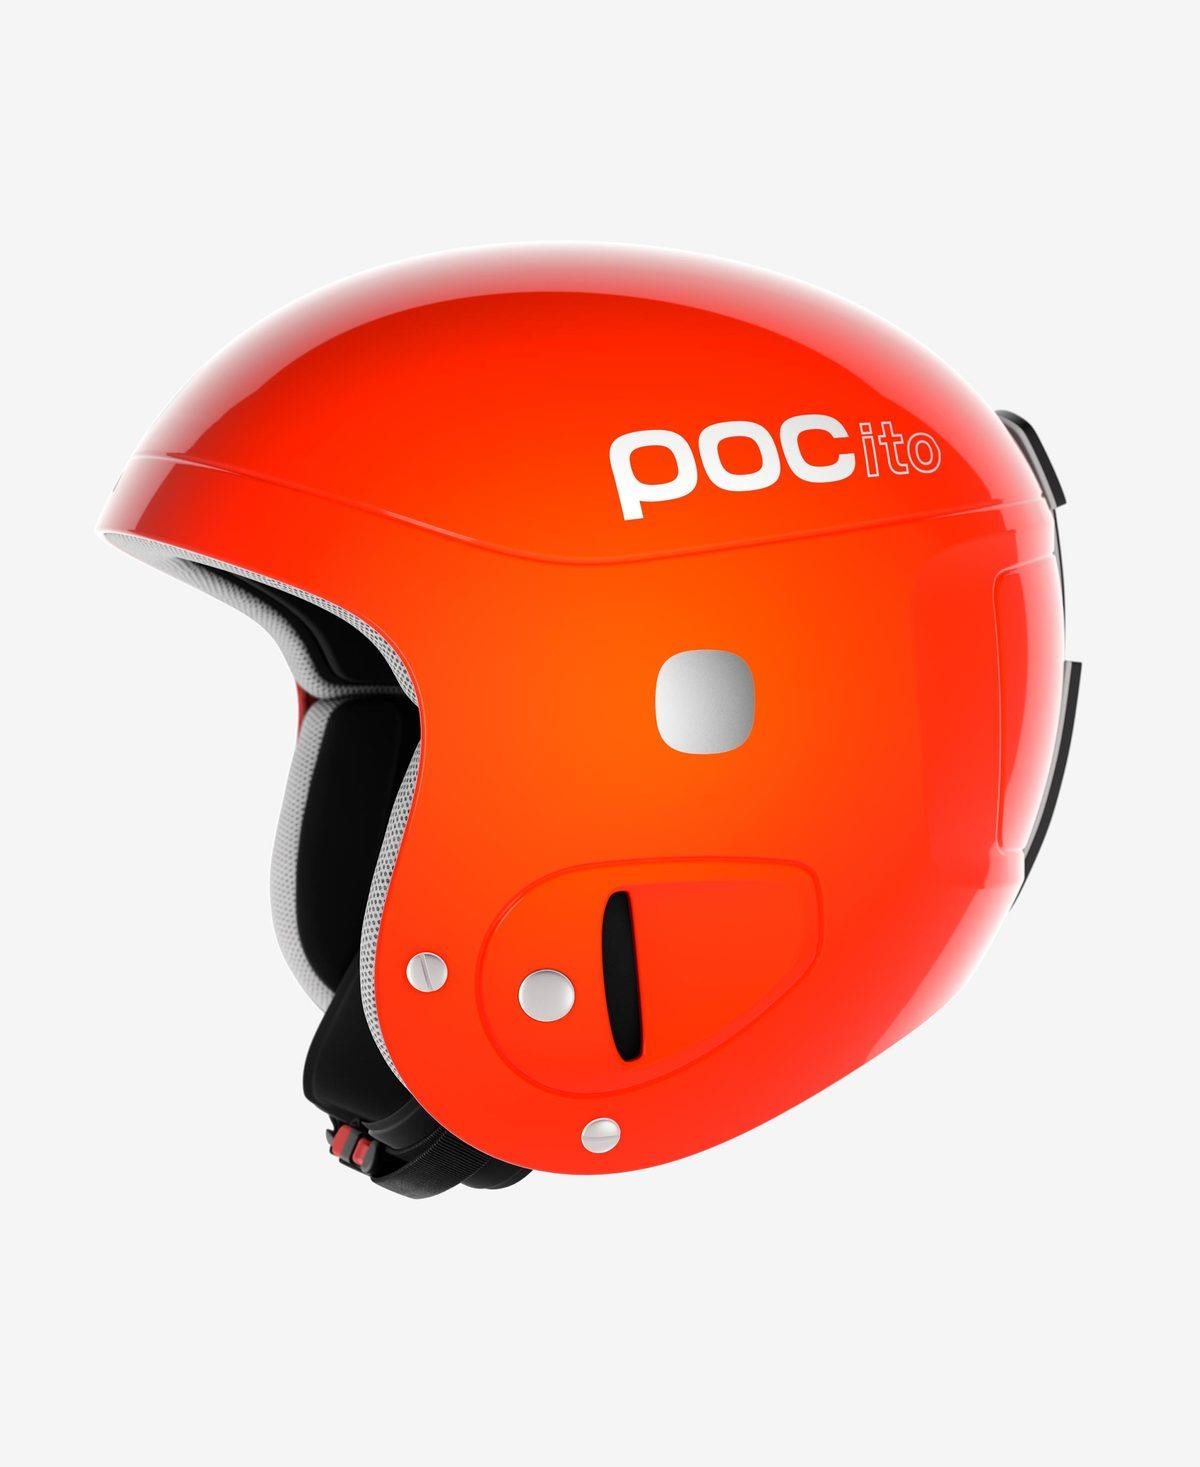 POC POCito Skull Fluorescent Orange Adjustable